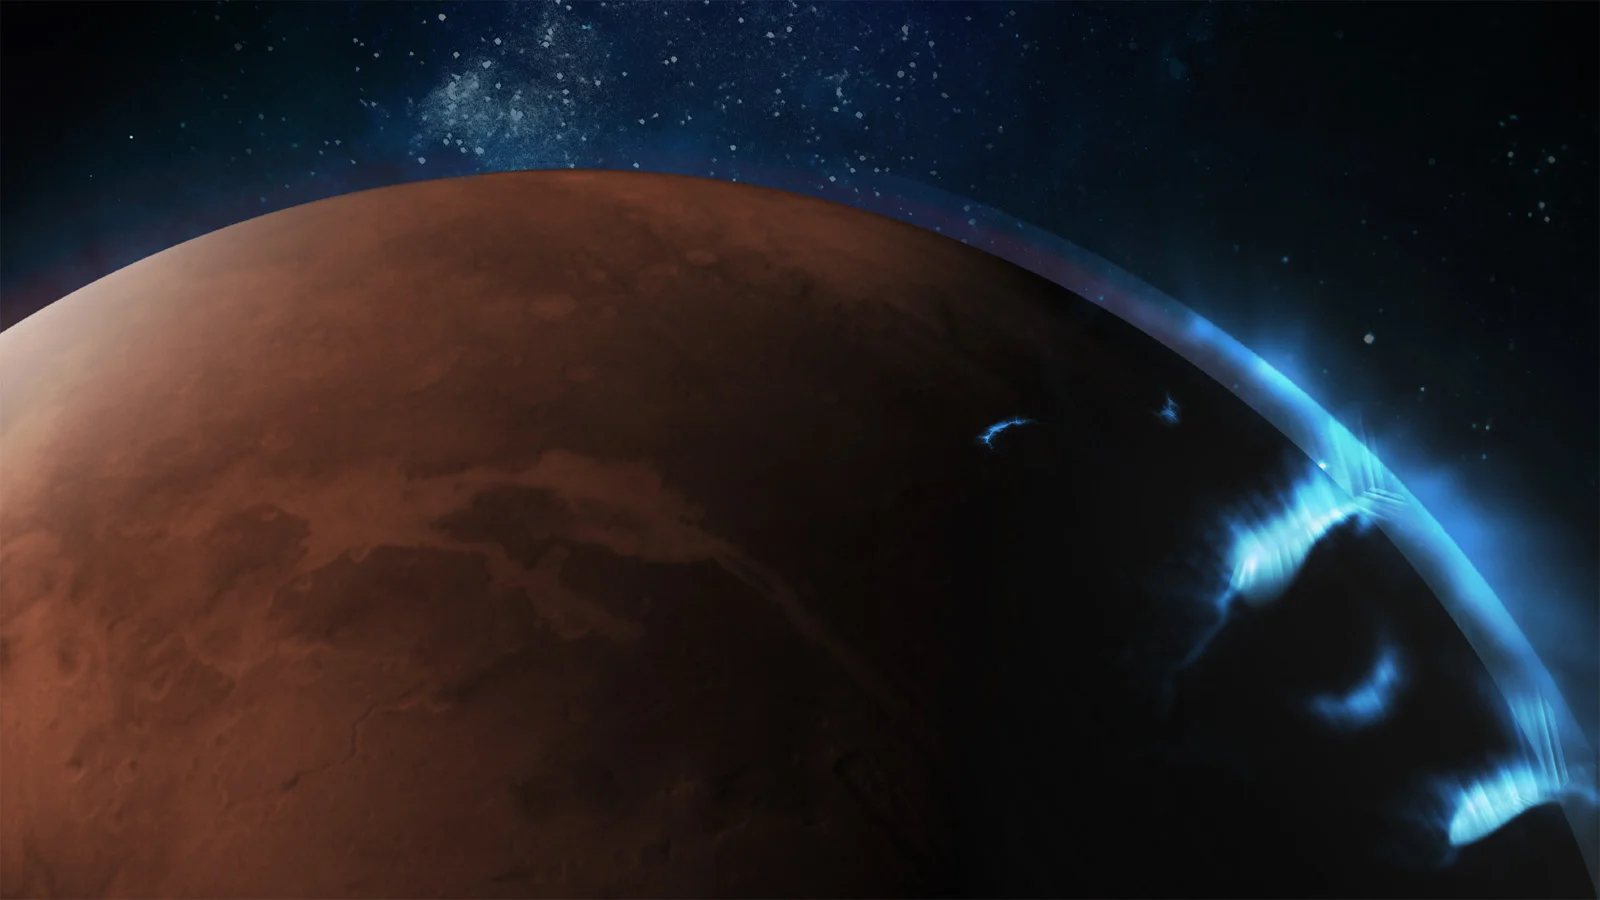 Mars' auroras caught in highest detail ever by Hope spacecraft